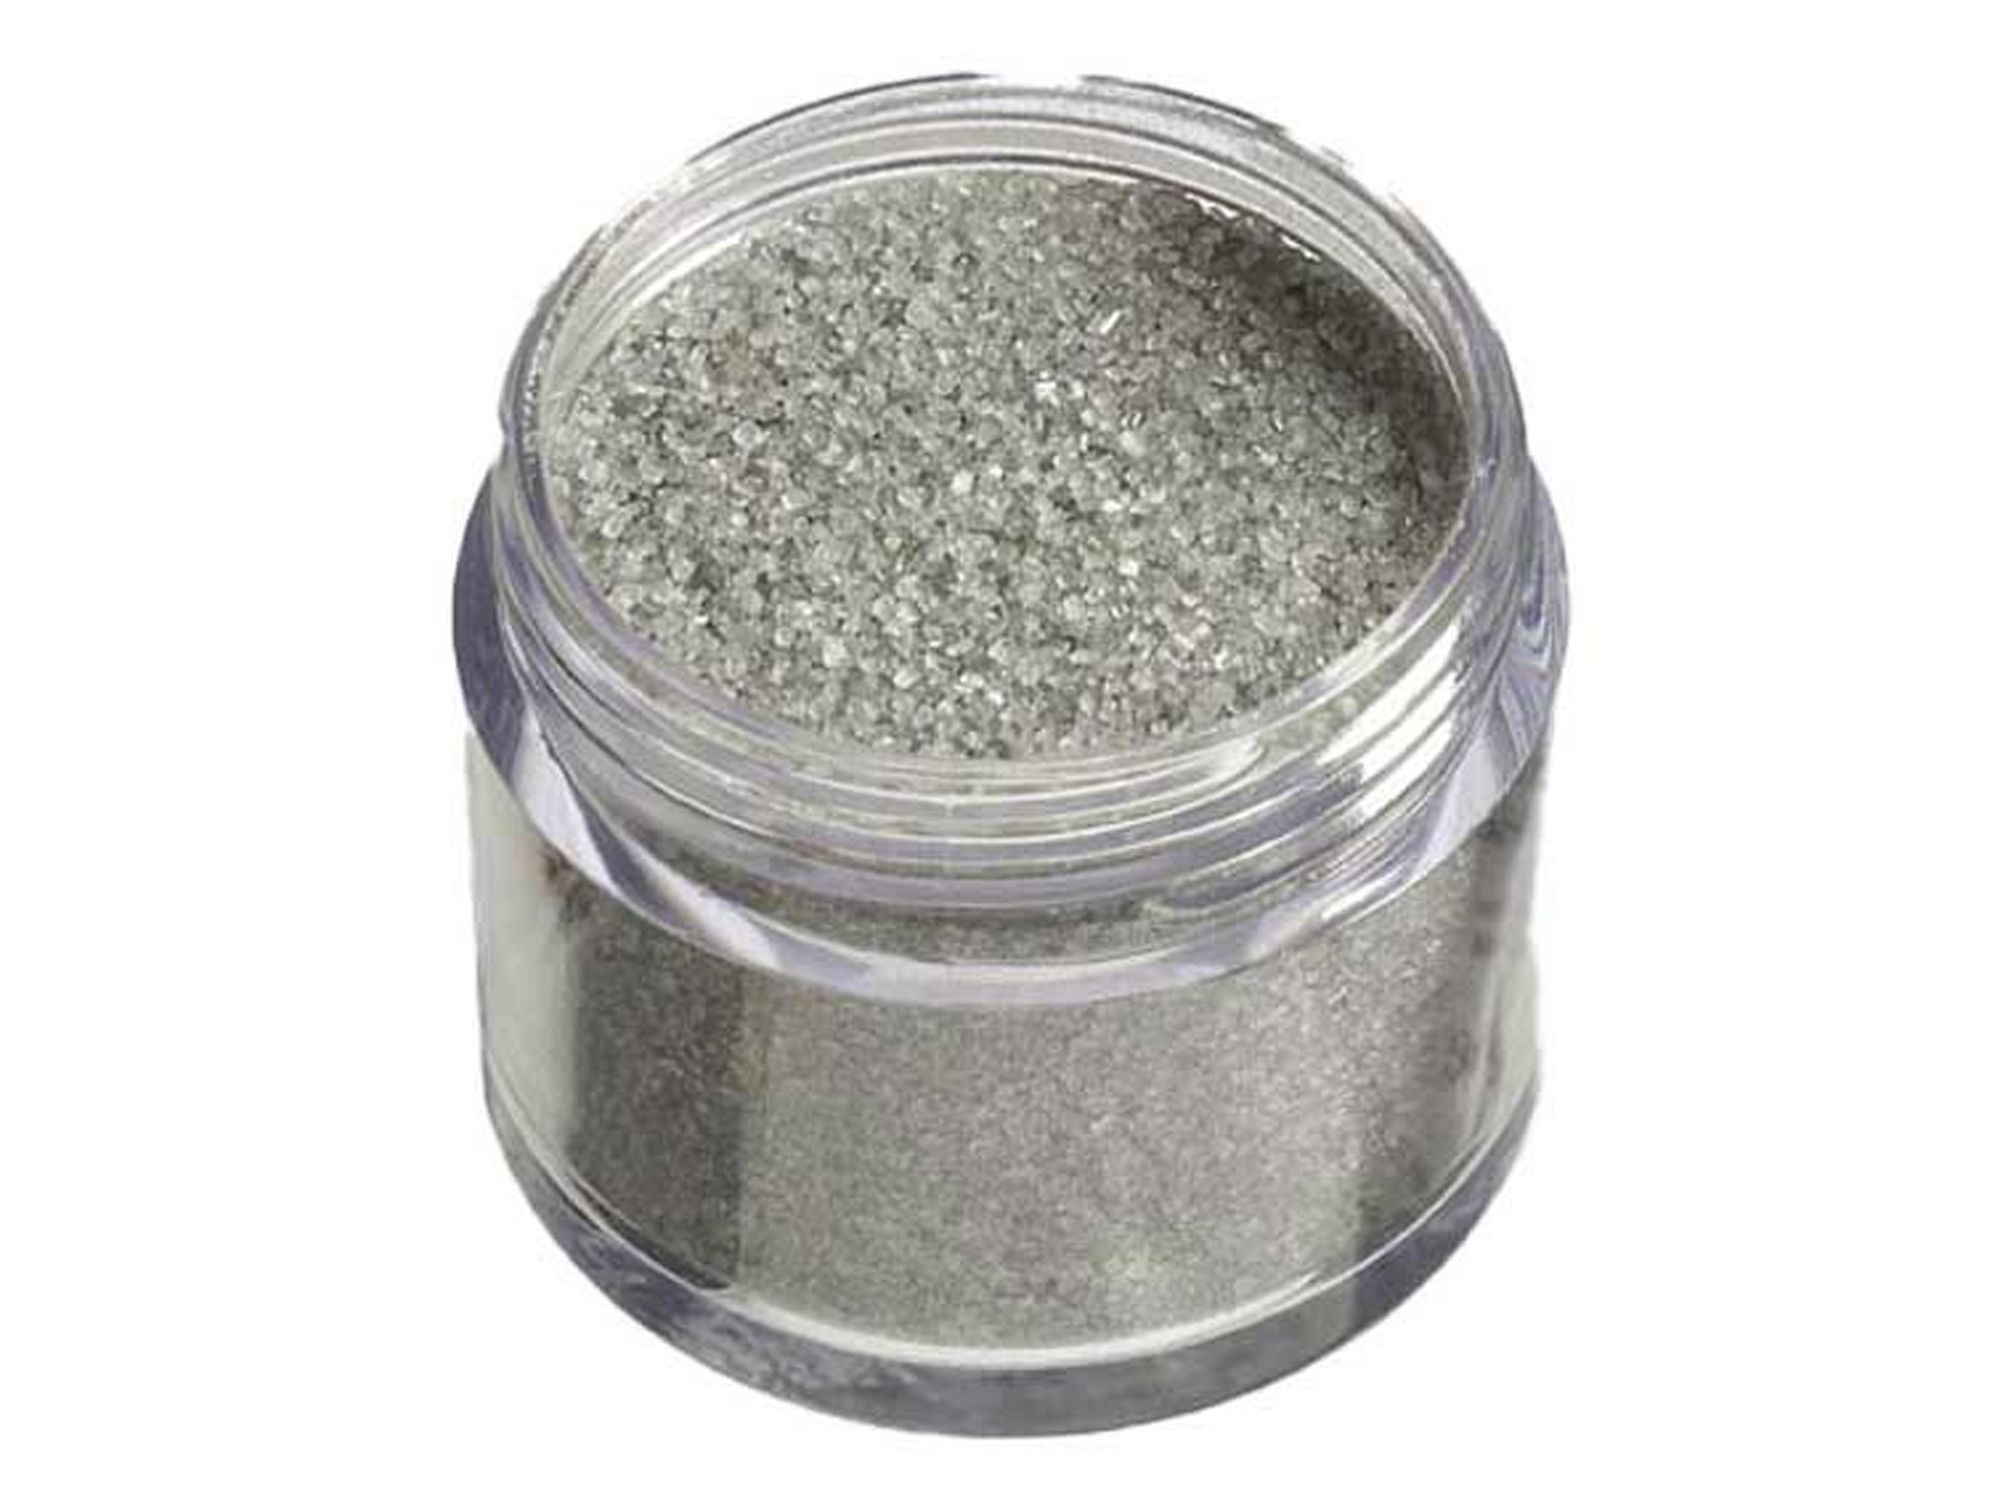 Feiner Bunter Zucker Silber